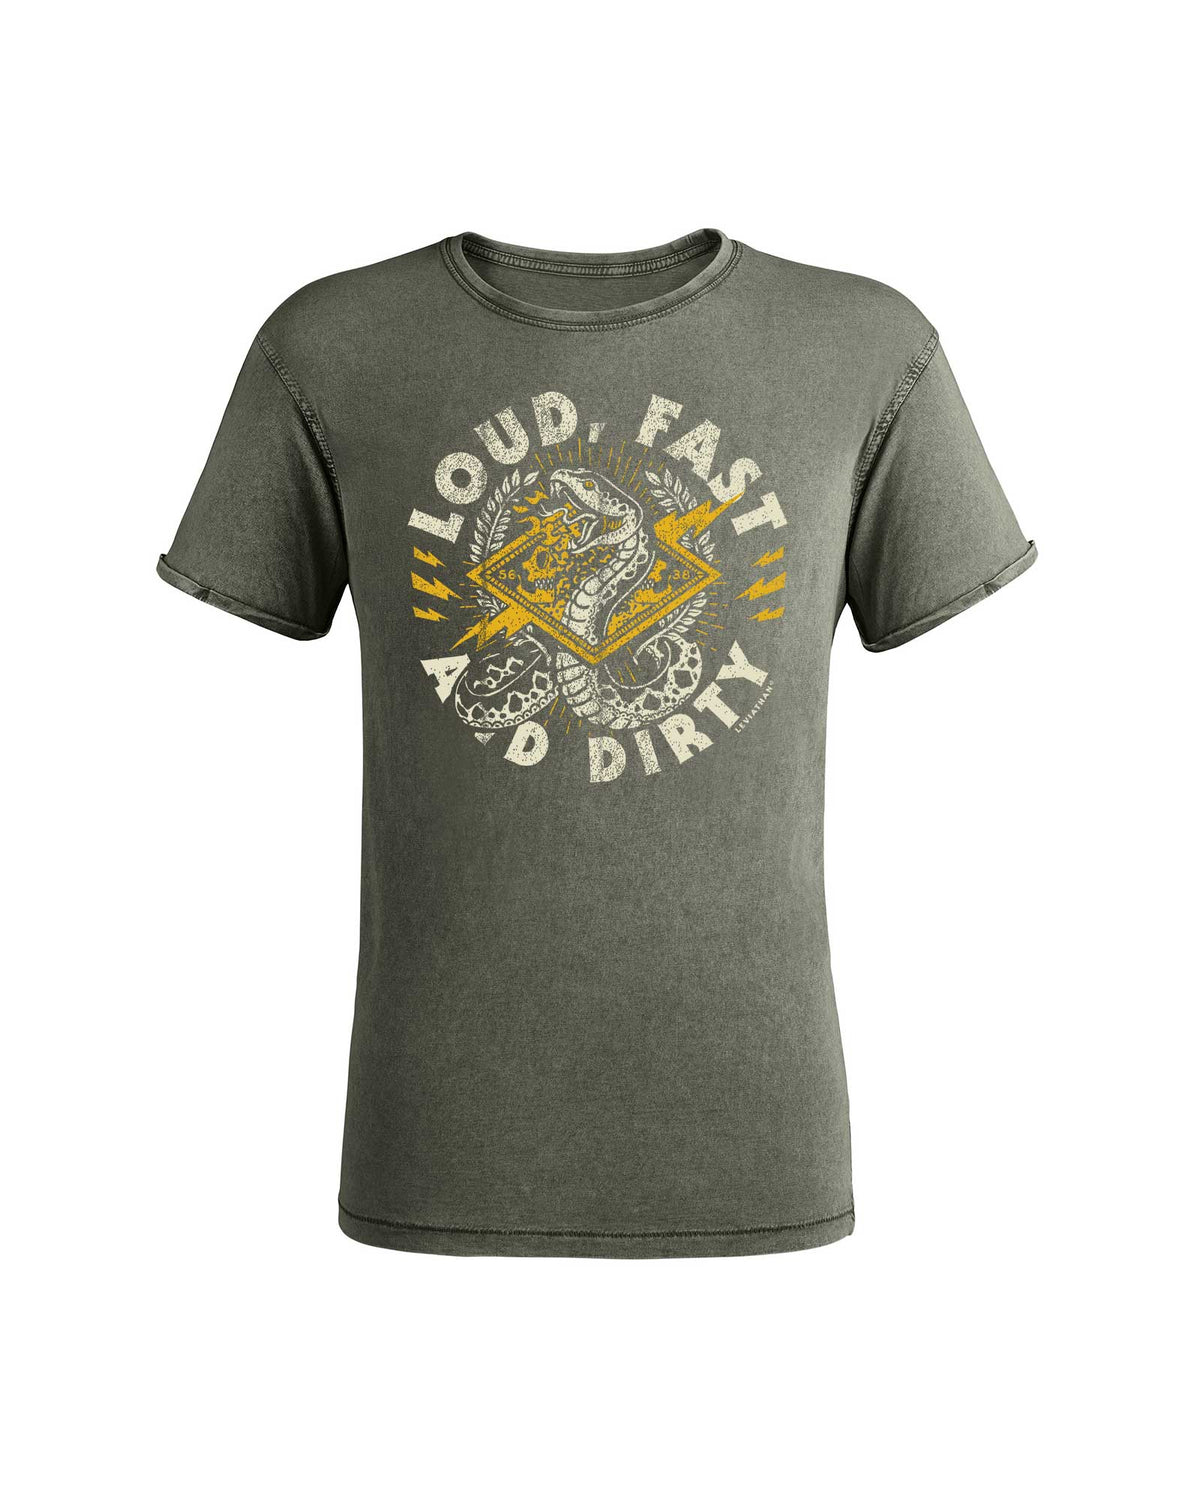 Camiseta Serpiente "Loud, Fast and Dirty" - Leviathan Co. x Rocktud - Rocktud - Rocktud